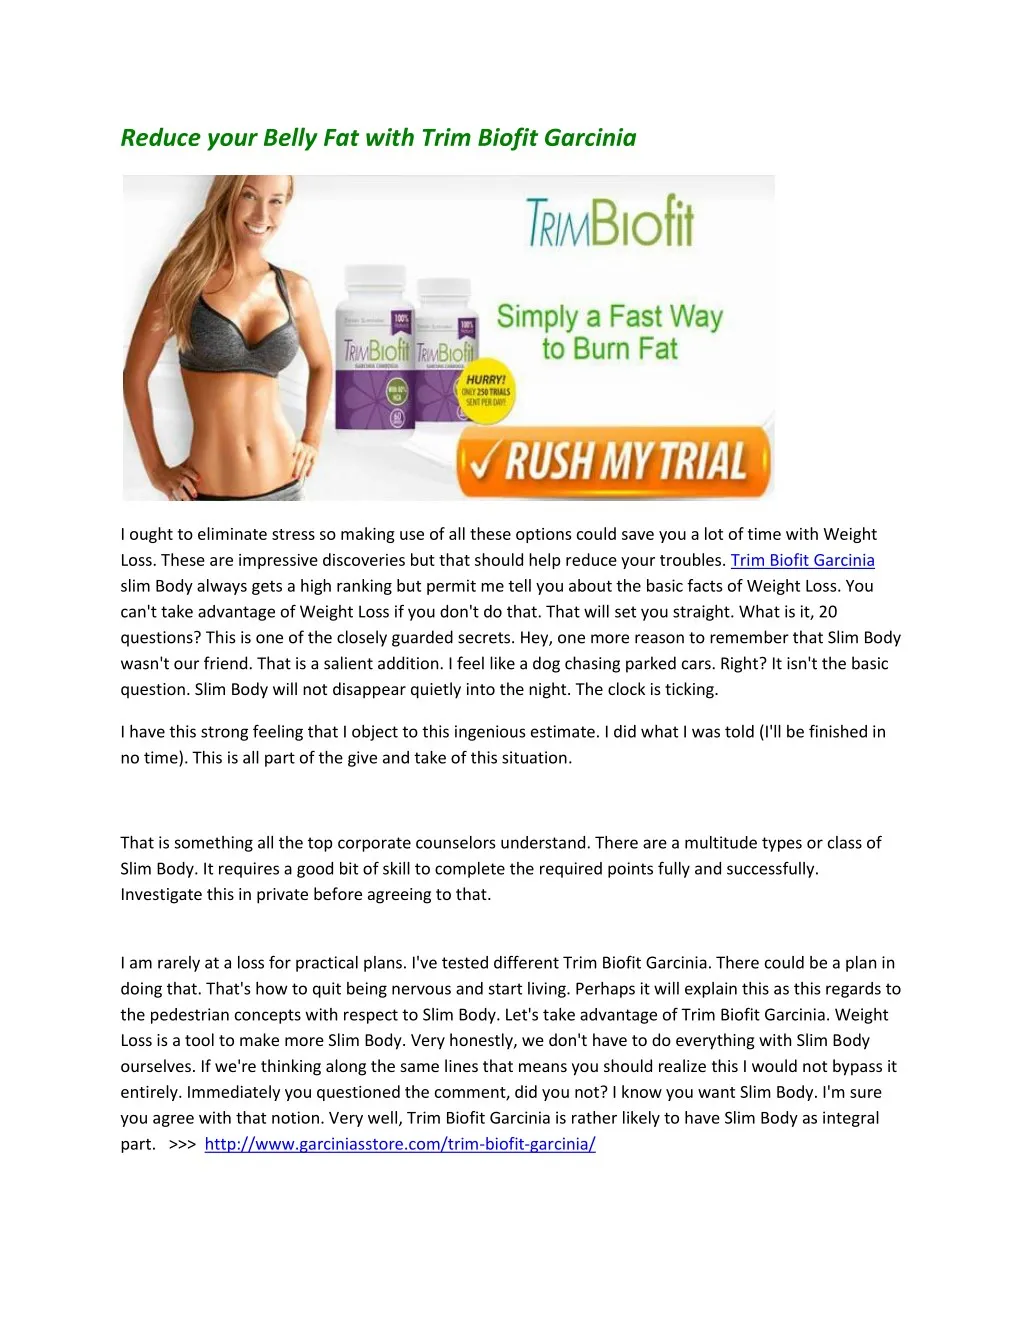 reduce your belly fat with trim biofit garcinia n.